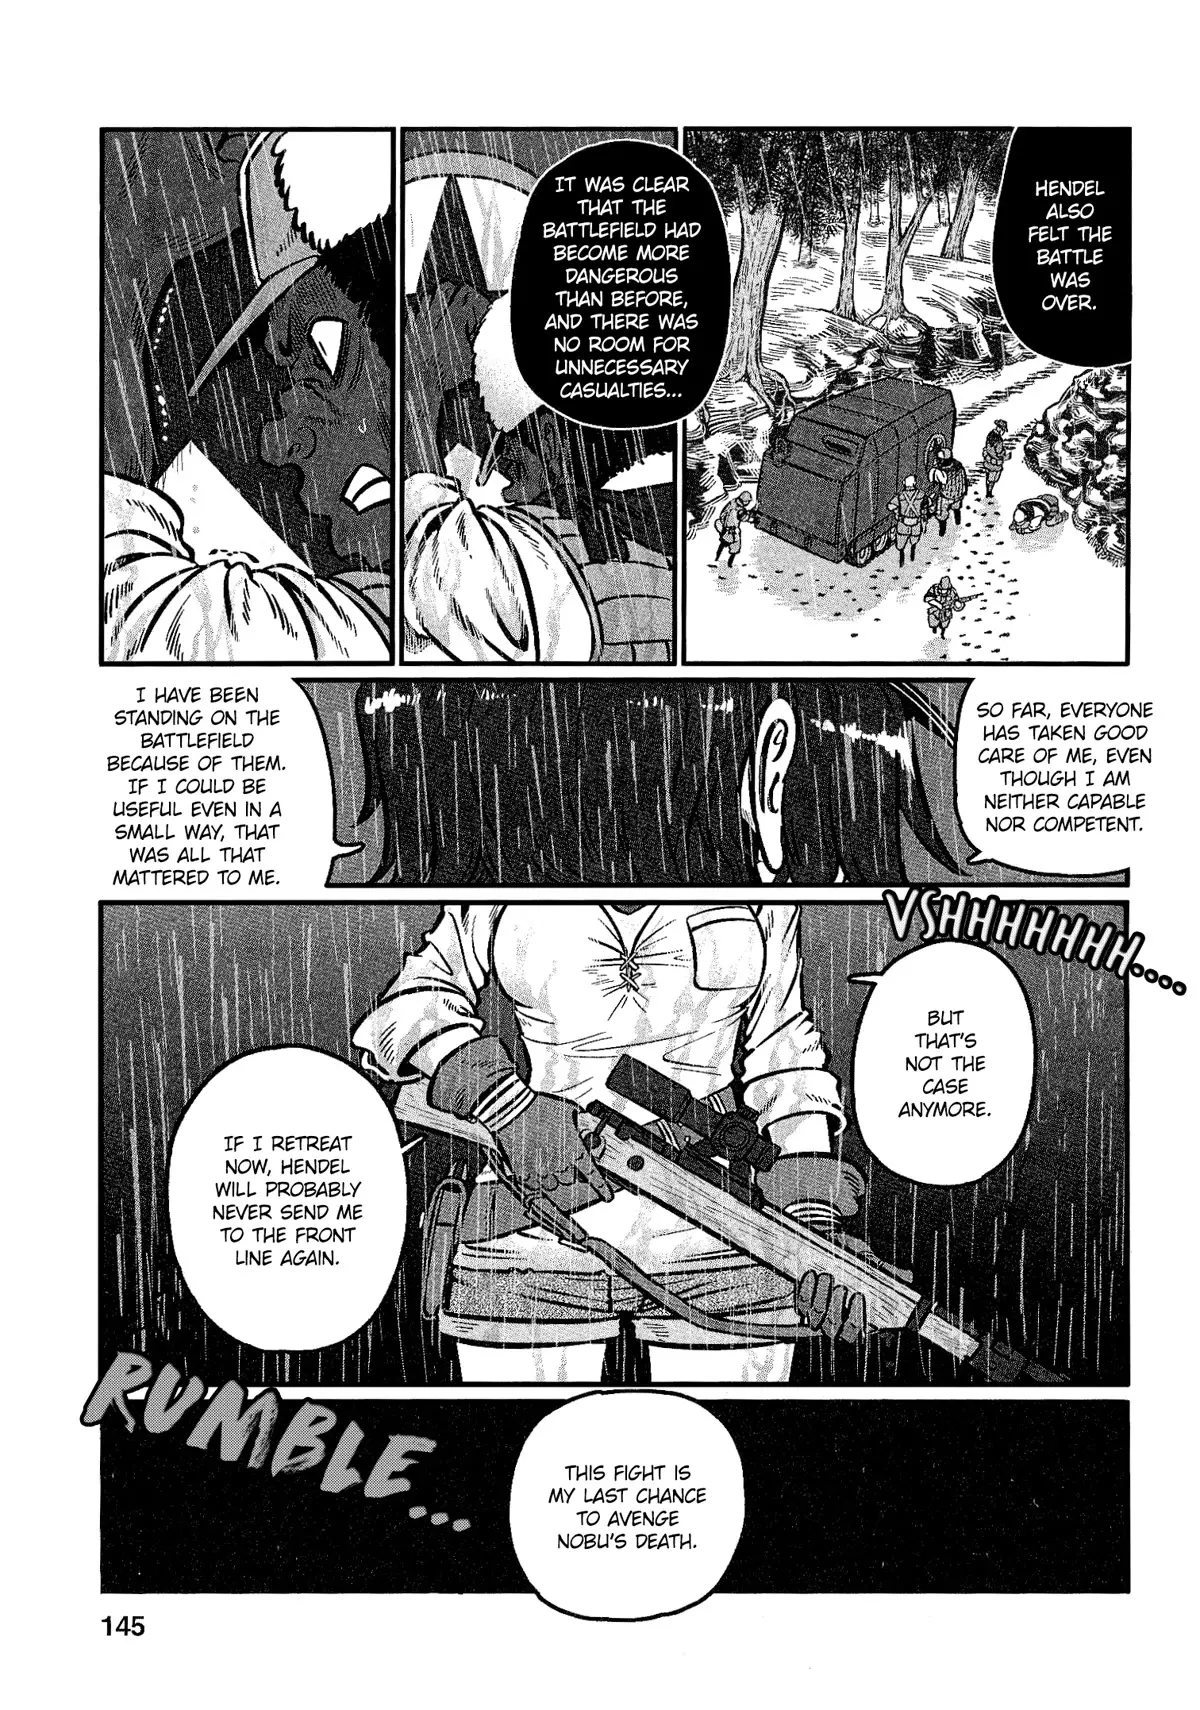 Groundless - Sekigan No Sogekihei - 29 page 3-7daaf3d1